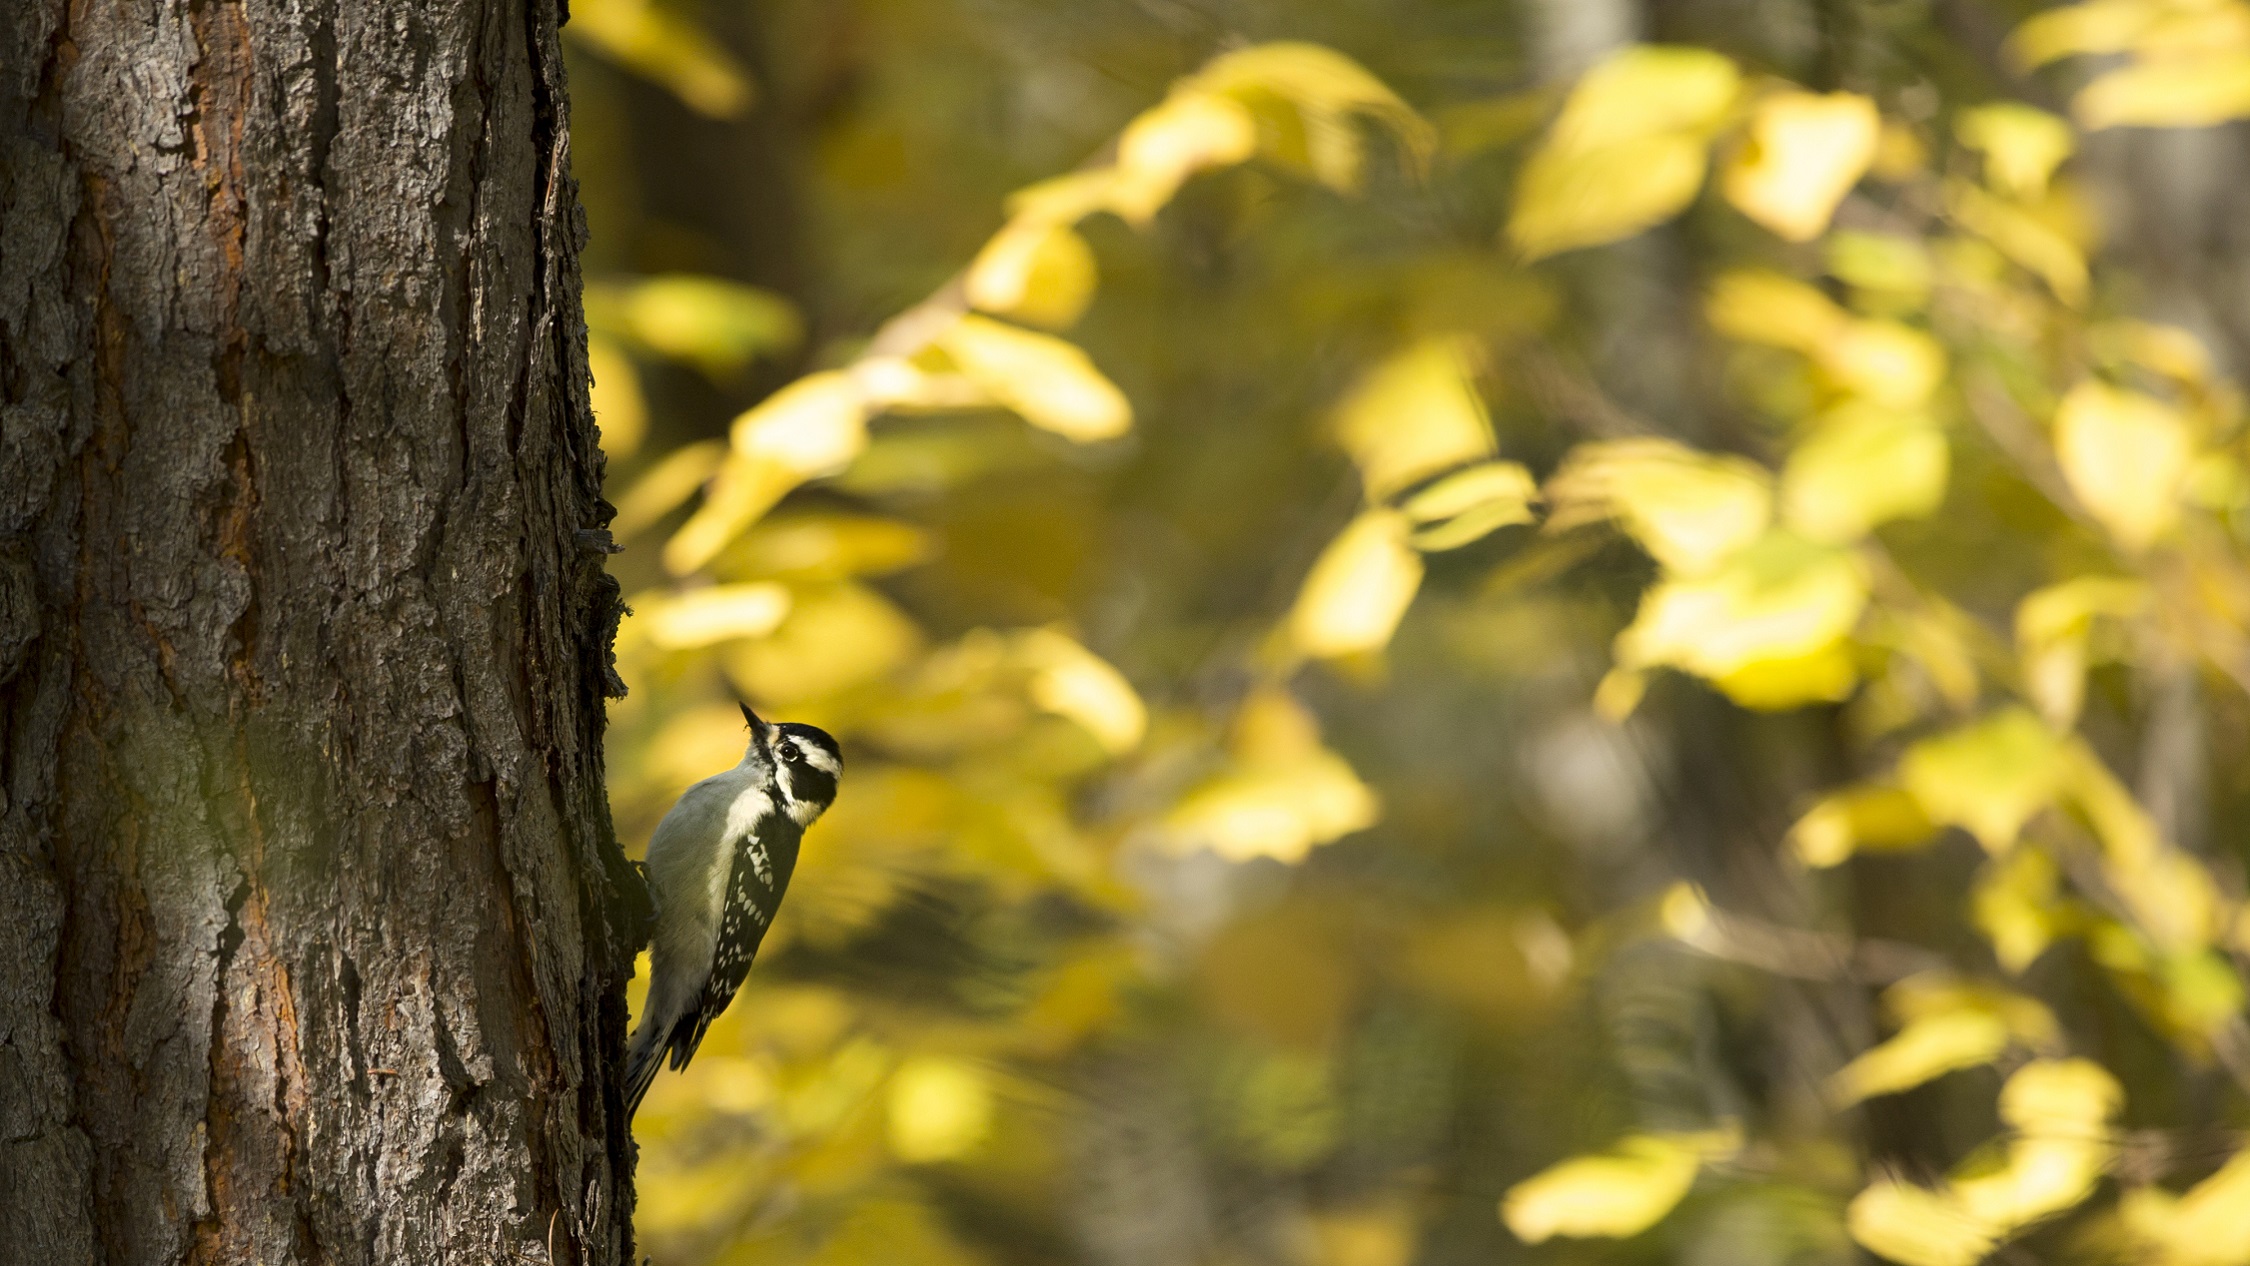 A female downy woodpecker